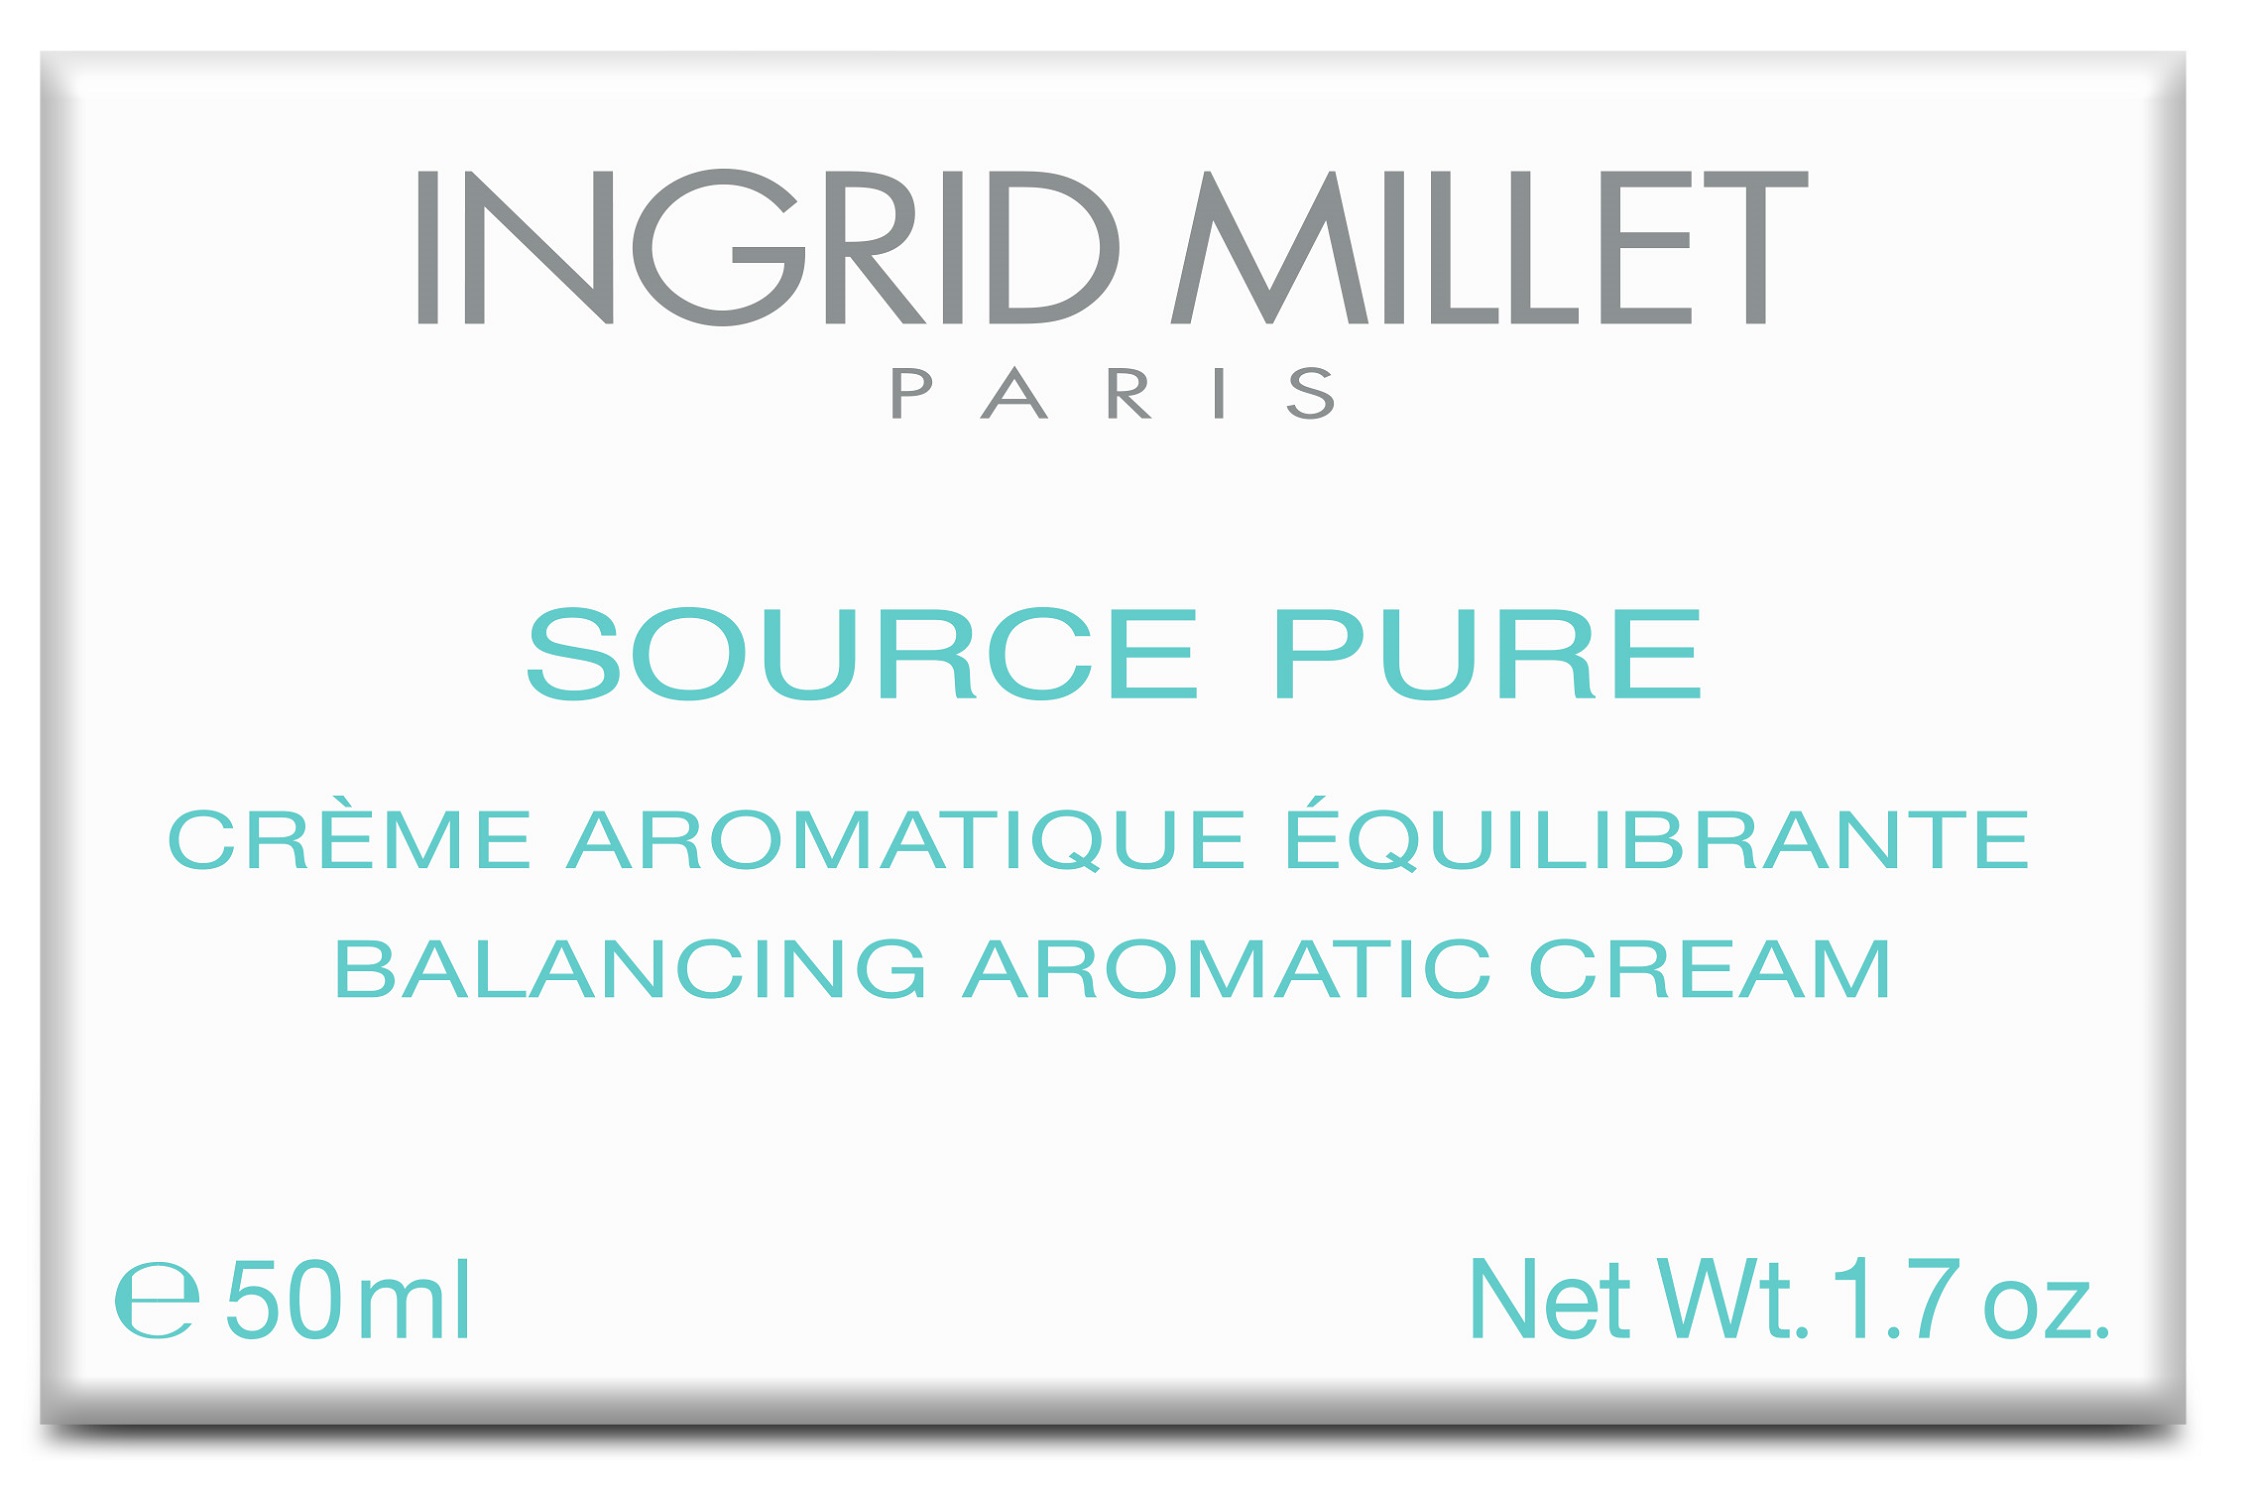 Регулирующий ароматический крем Source Pure Créme Aromatique Équilibrante